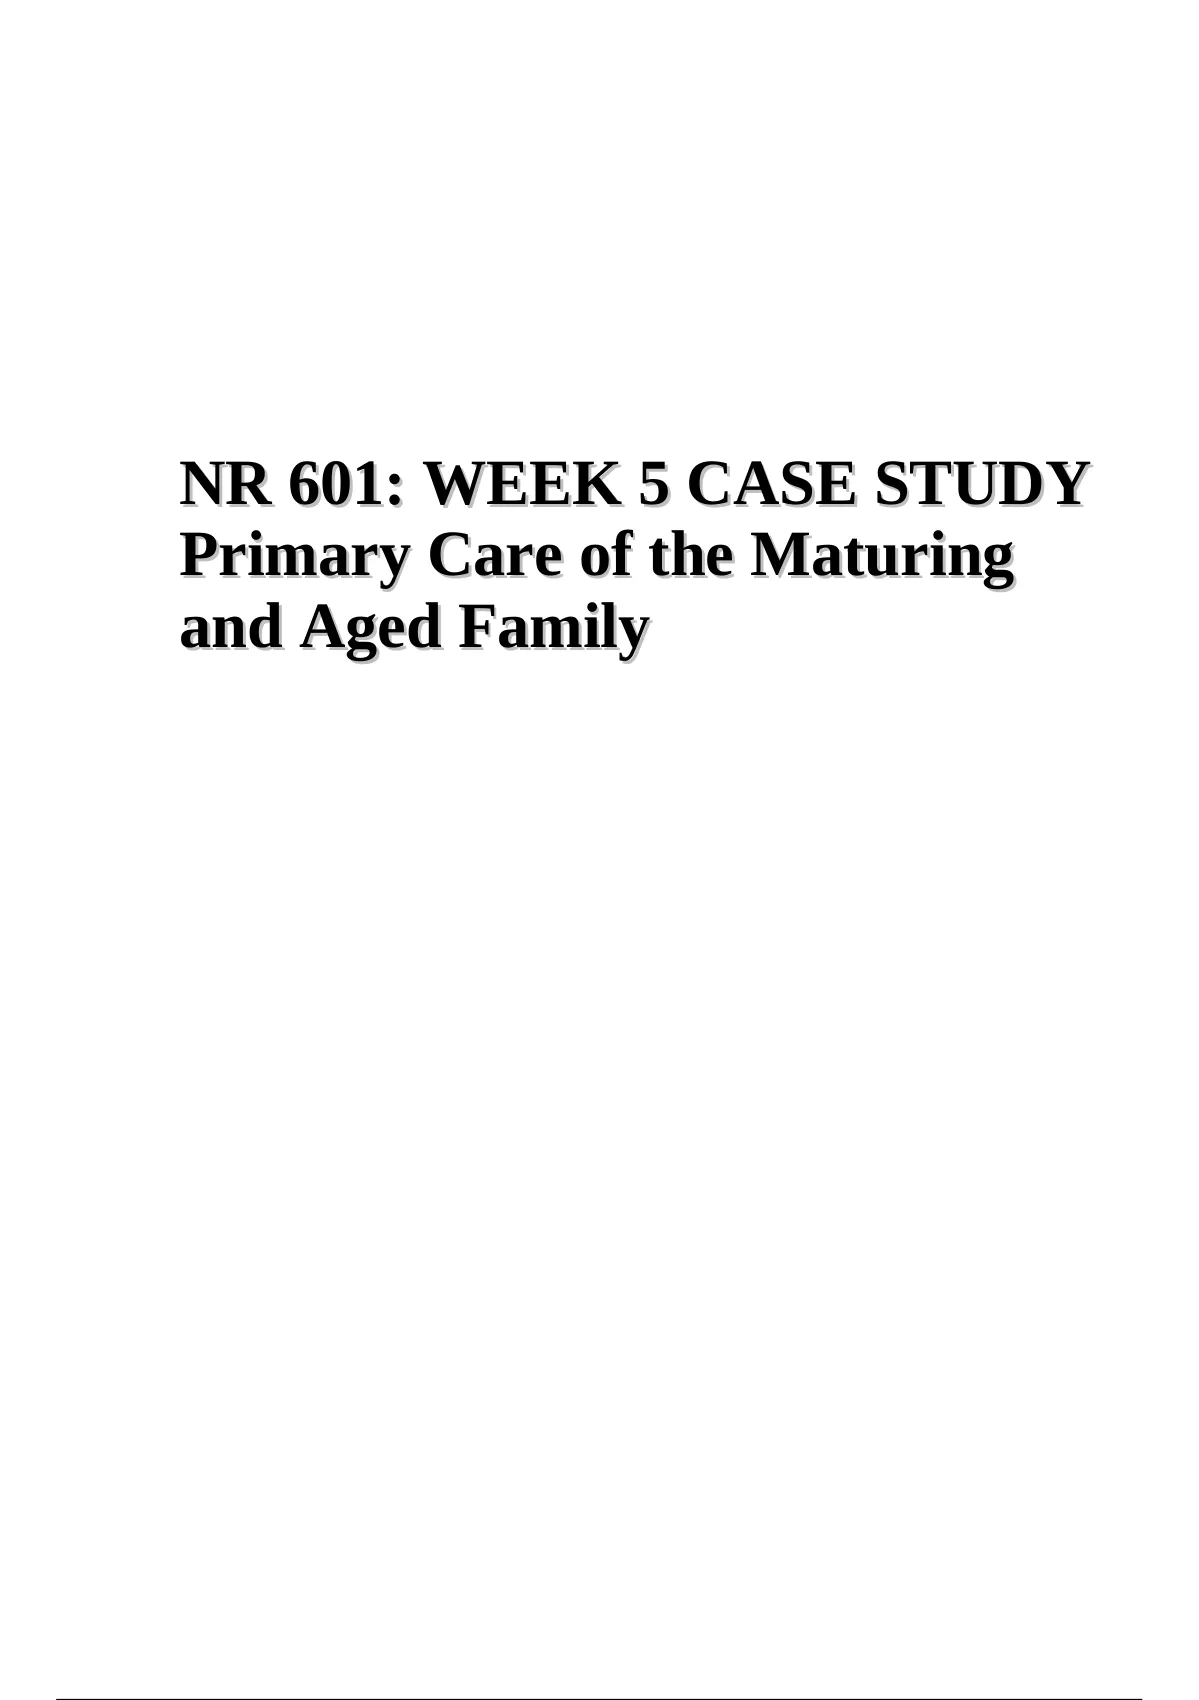 week 5 case study nr 601